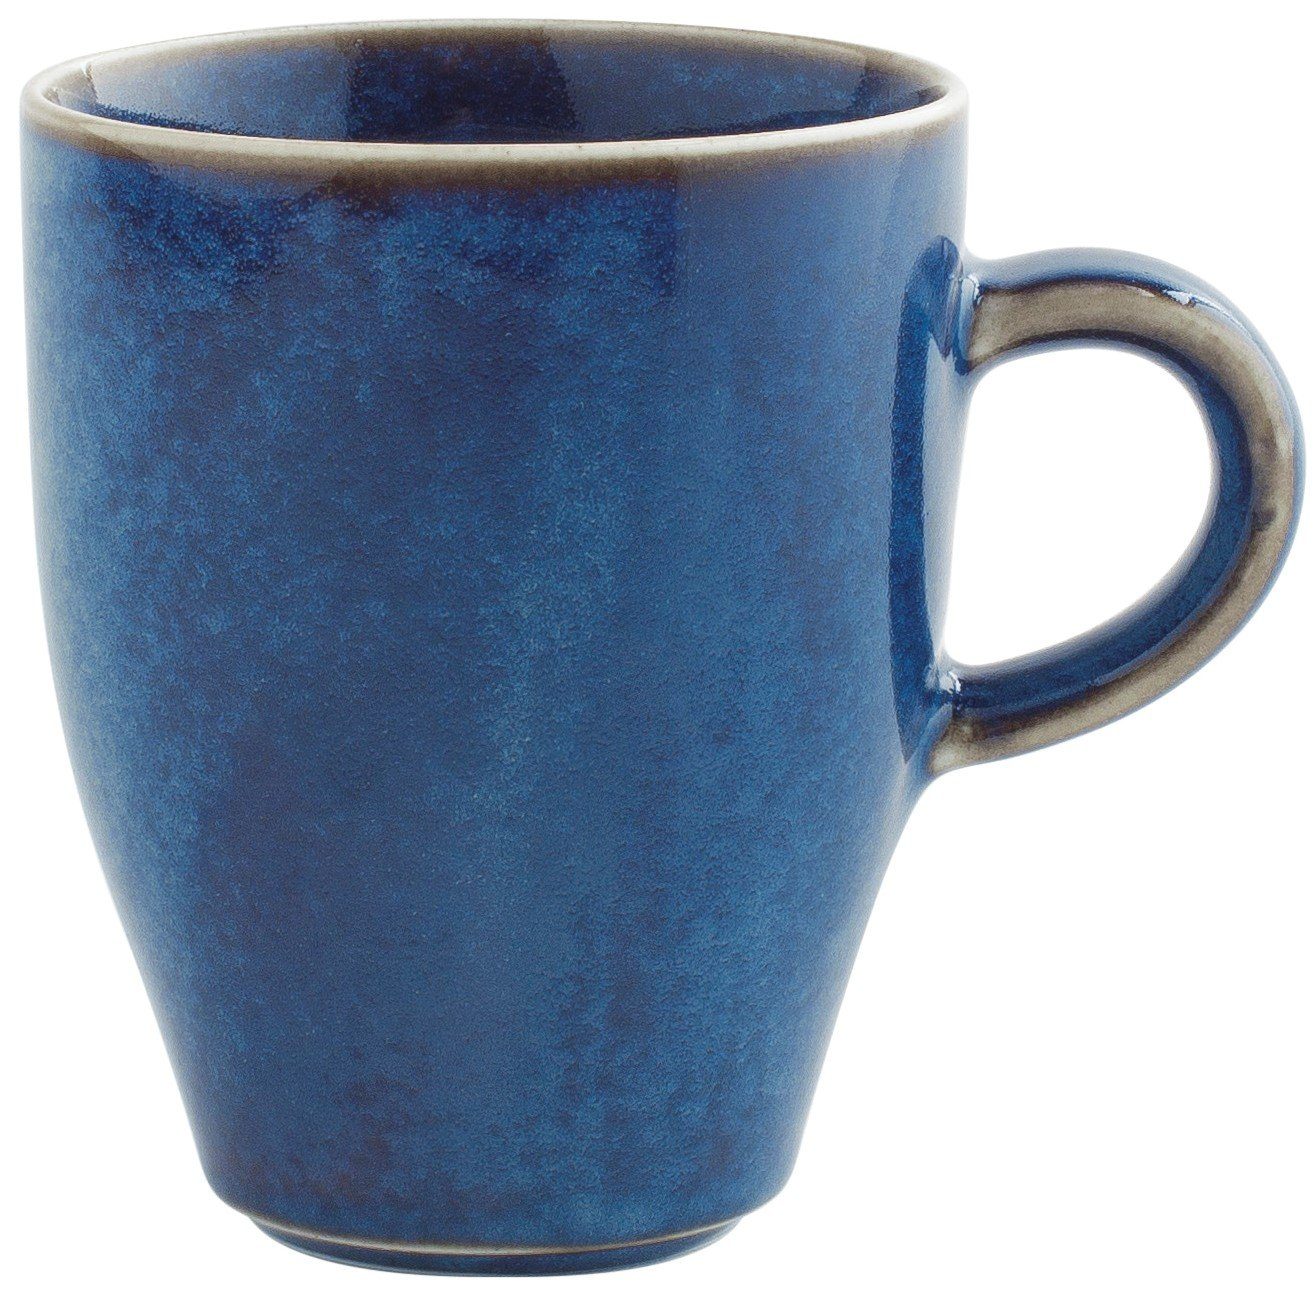 Kahla Becher Homestyle atlantic 0,32 Porzellan, Germany blue Made Handglasiert, l, in Kaffeebecher